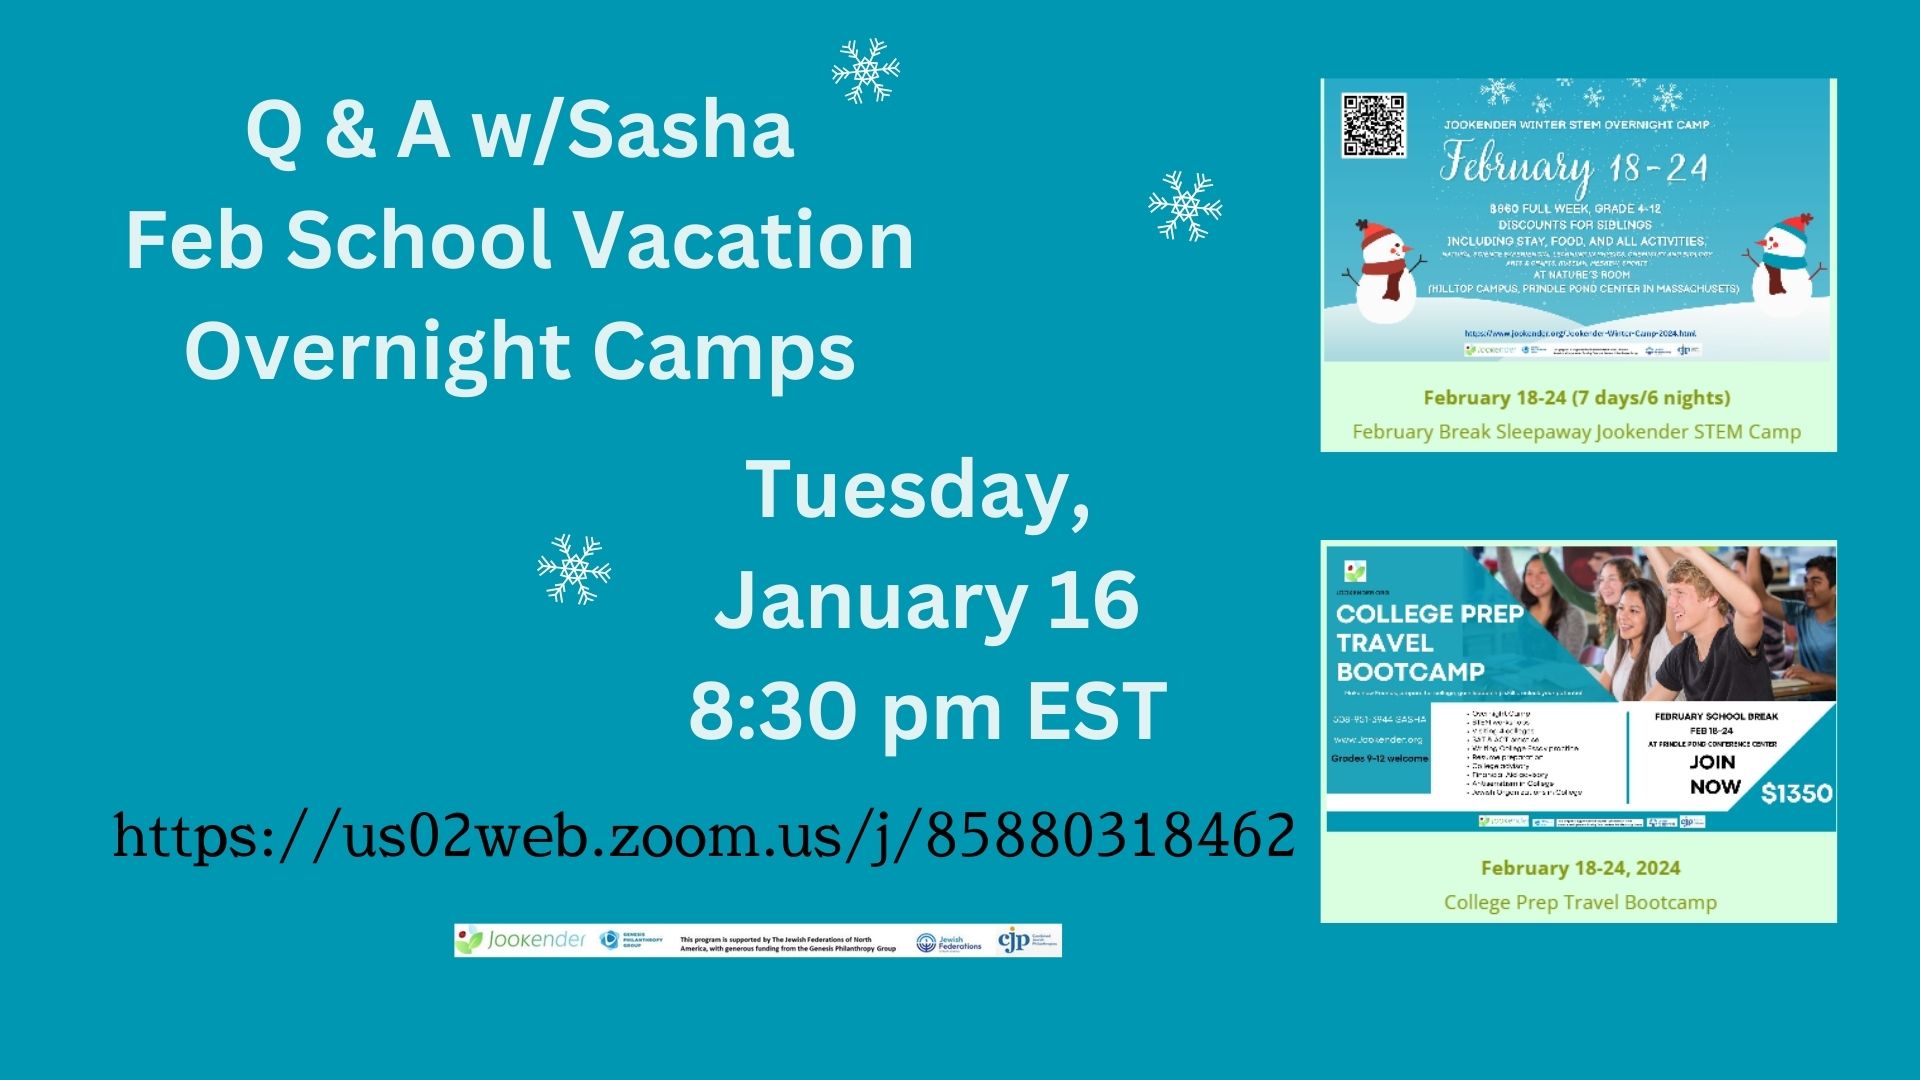 Q & A w/Sasha Feb School Vacation Overnight Camps